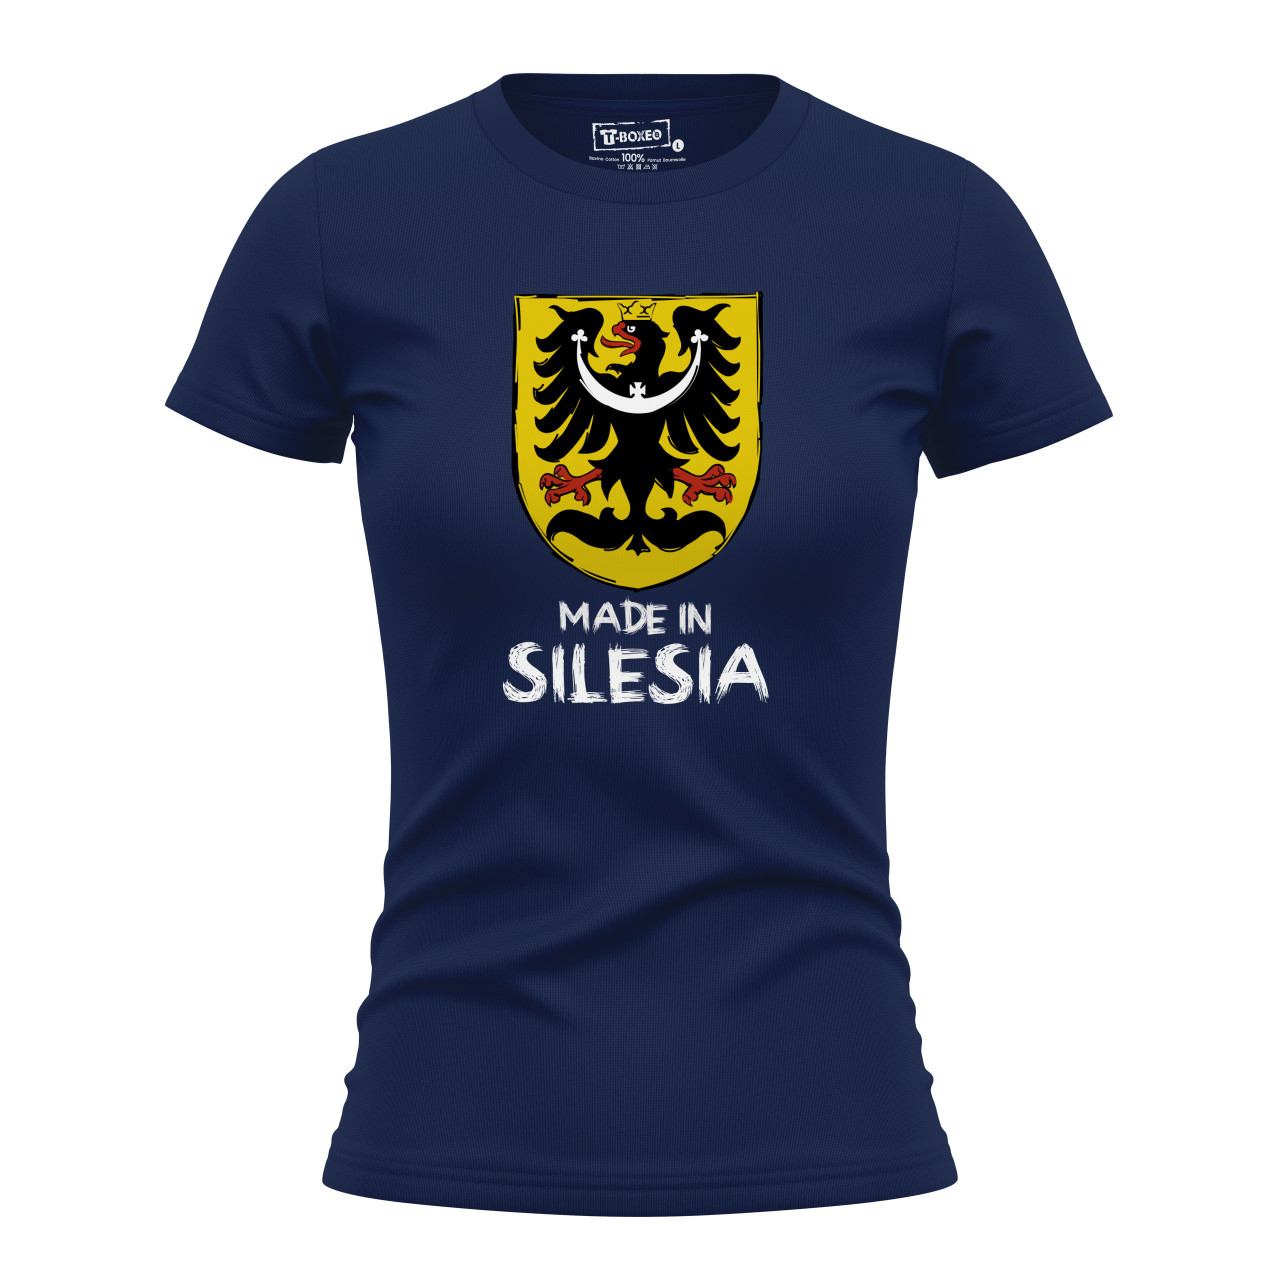 Dámské tričko s potiskem “Made in Silesia” 